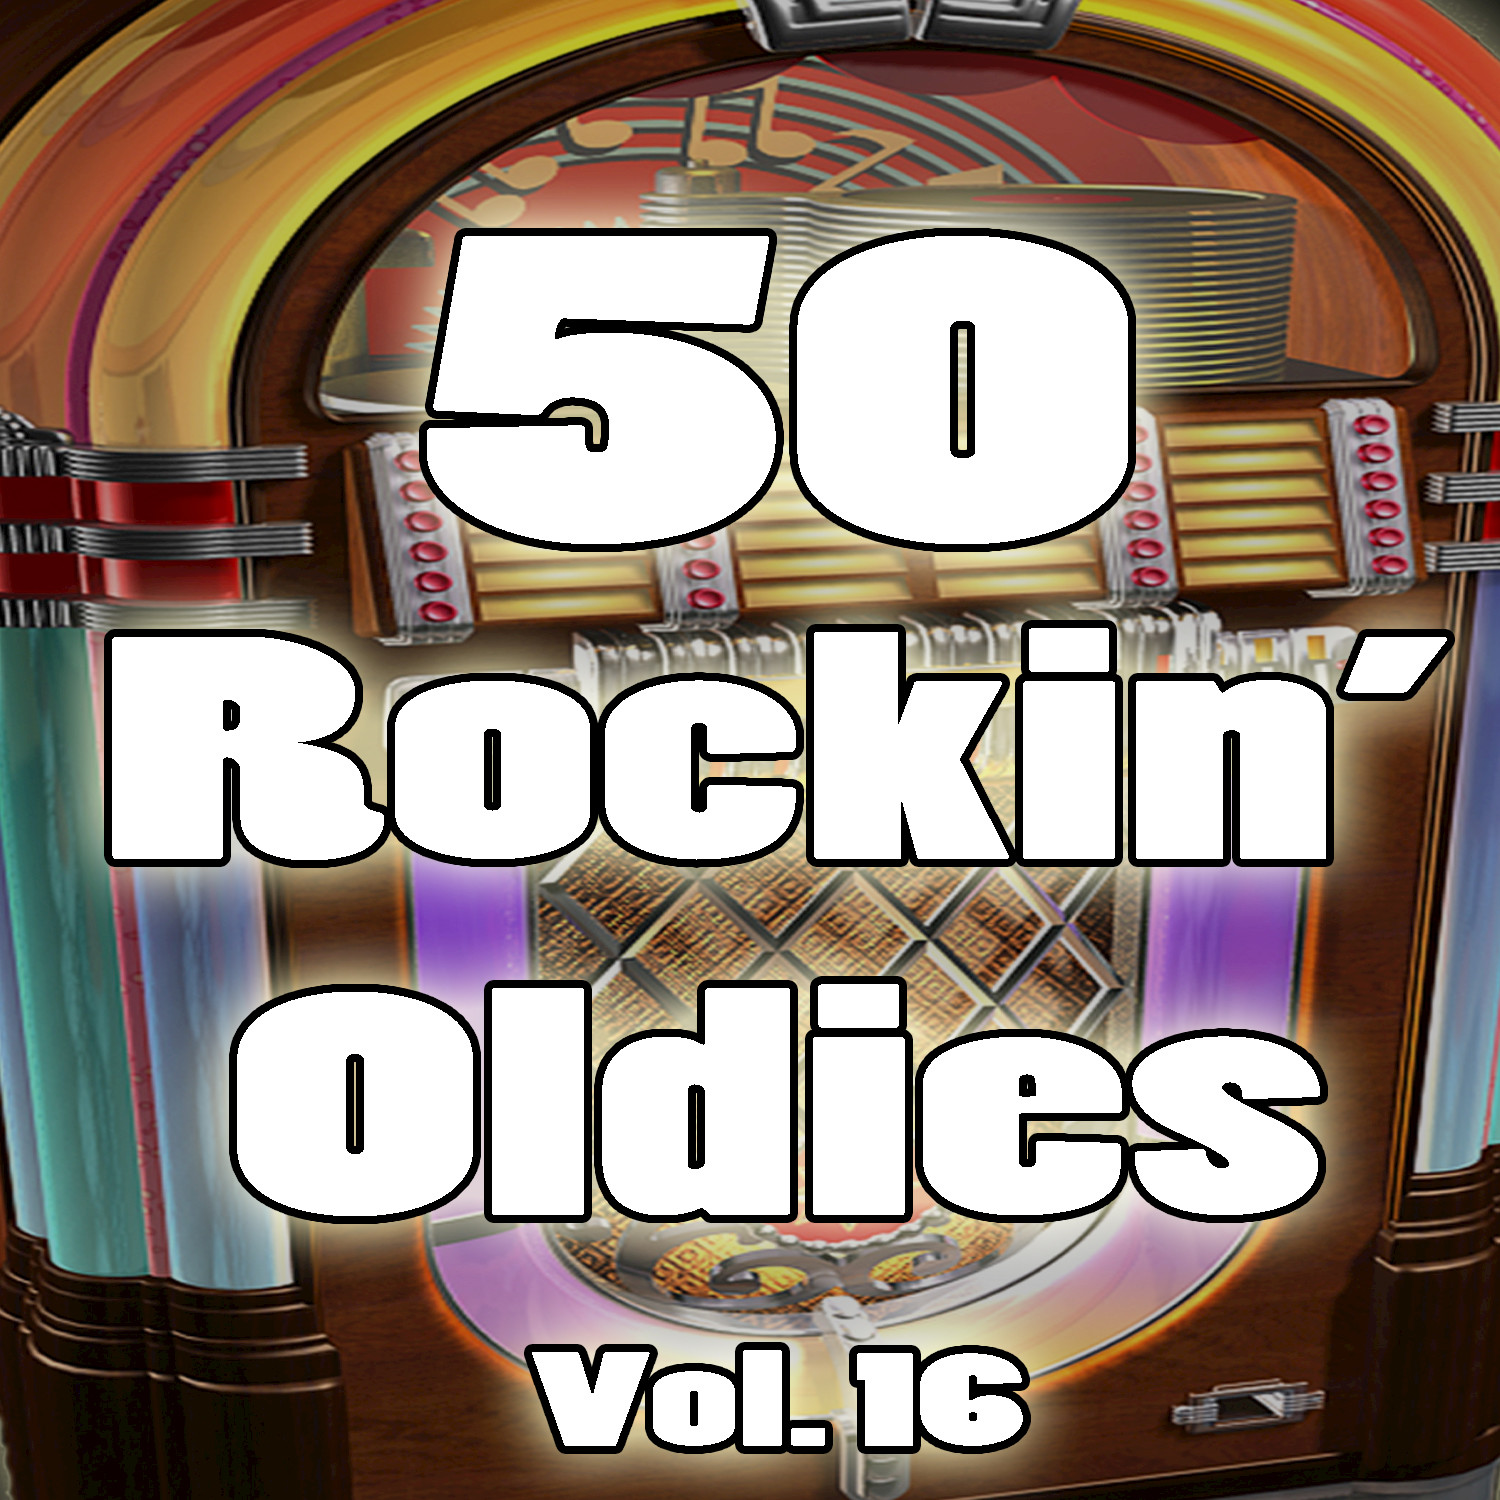 50 Rockin' Oldies, Vol. 16